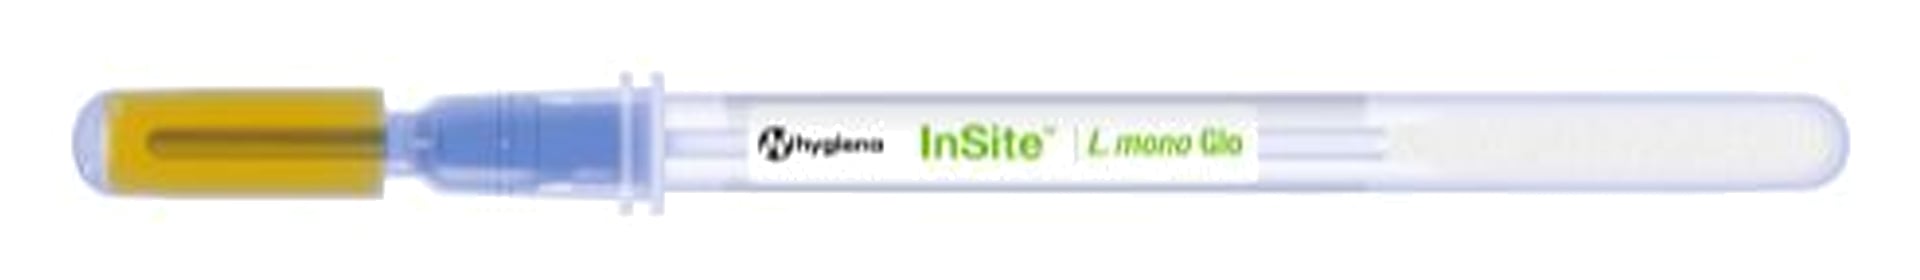 Hygiena InSite Listeria mono GLO (dual detection)  testkit 50st